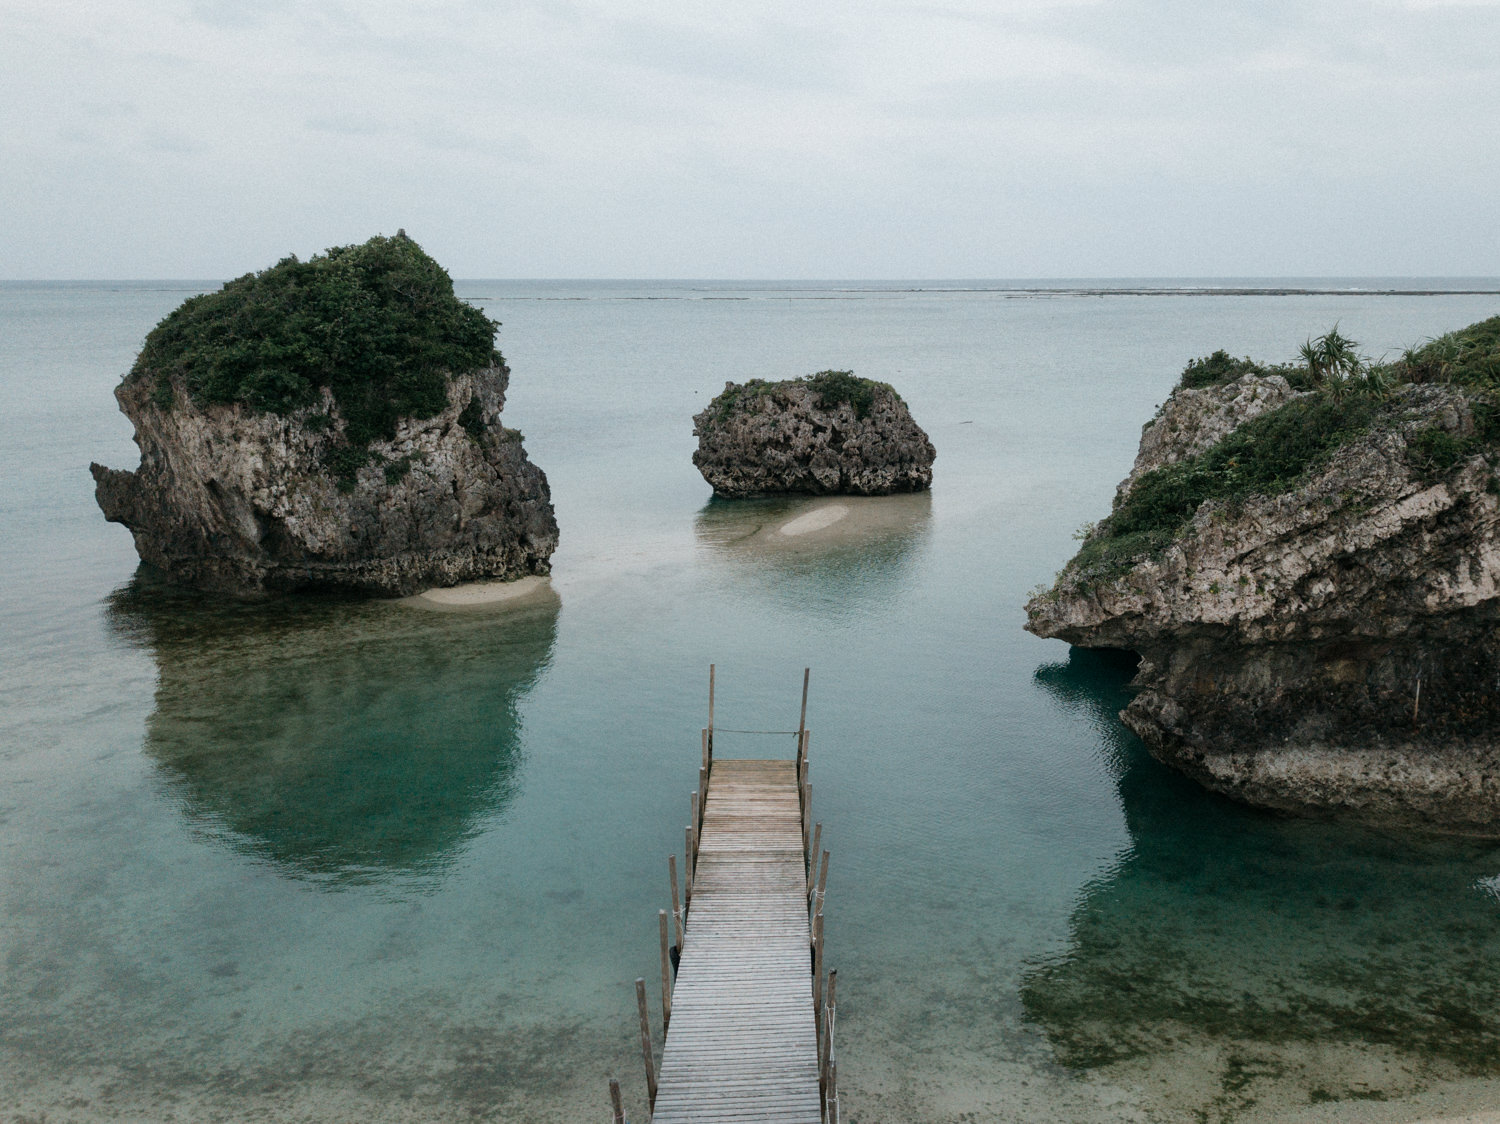 Okinawa by Yann Audic